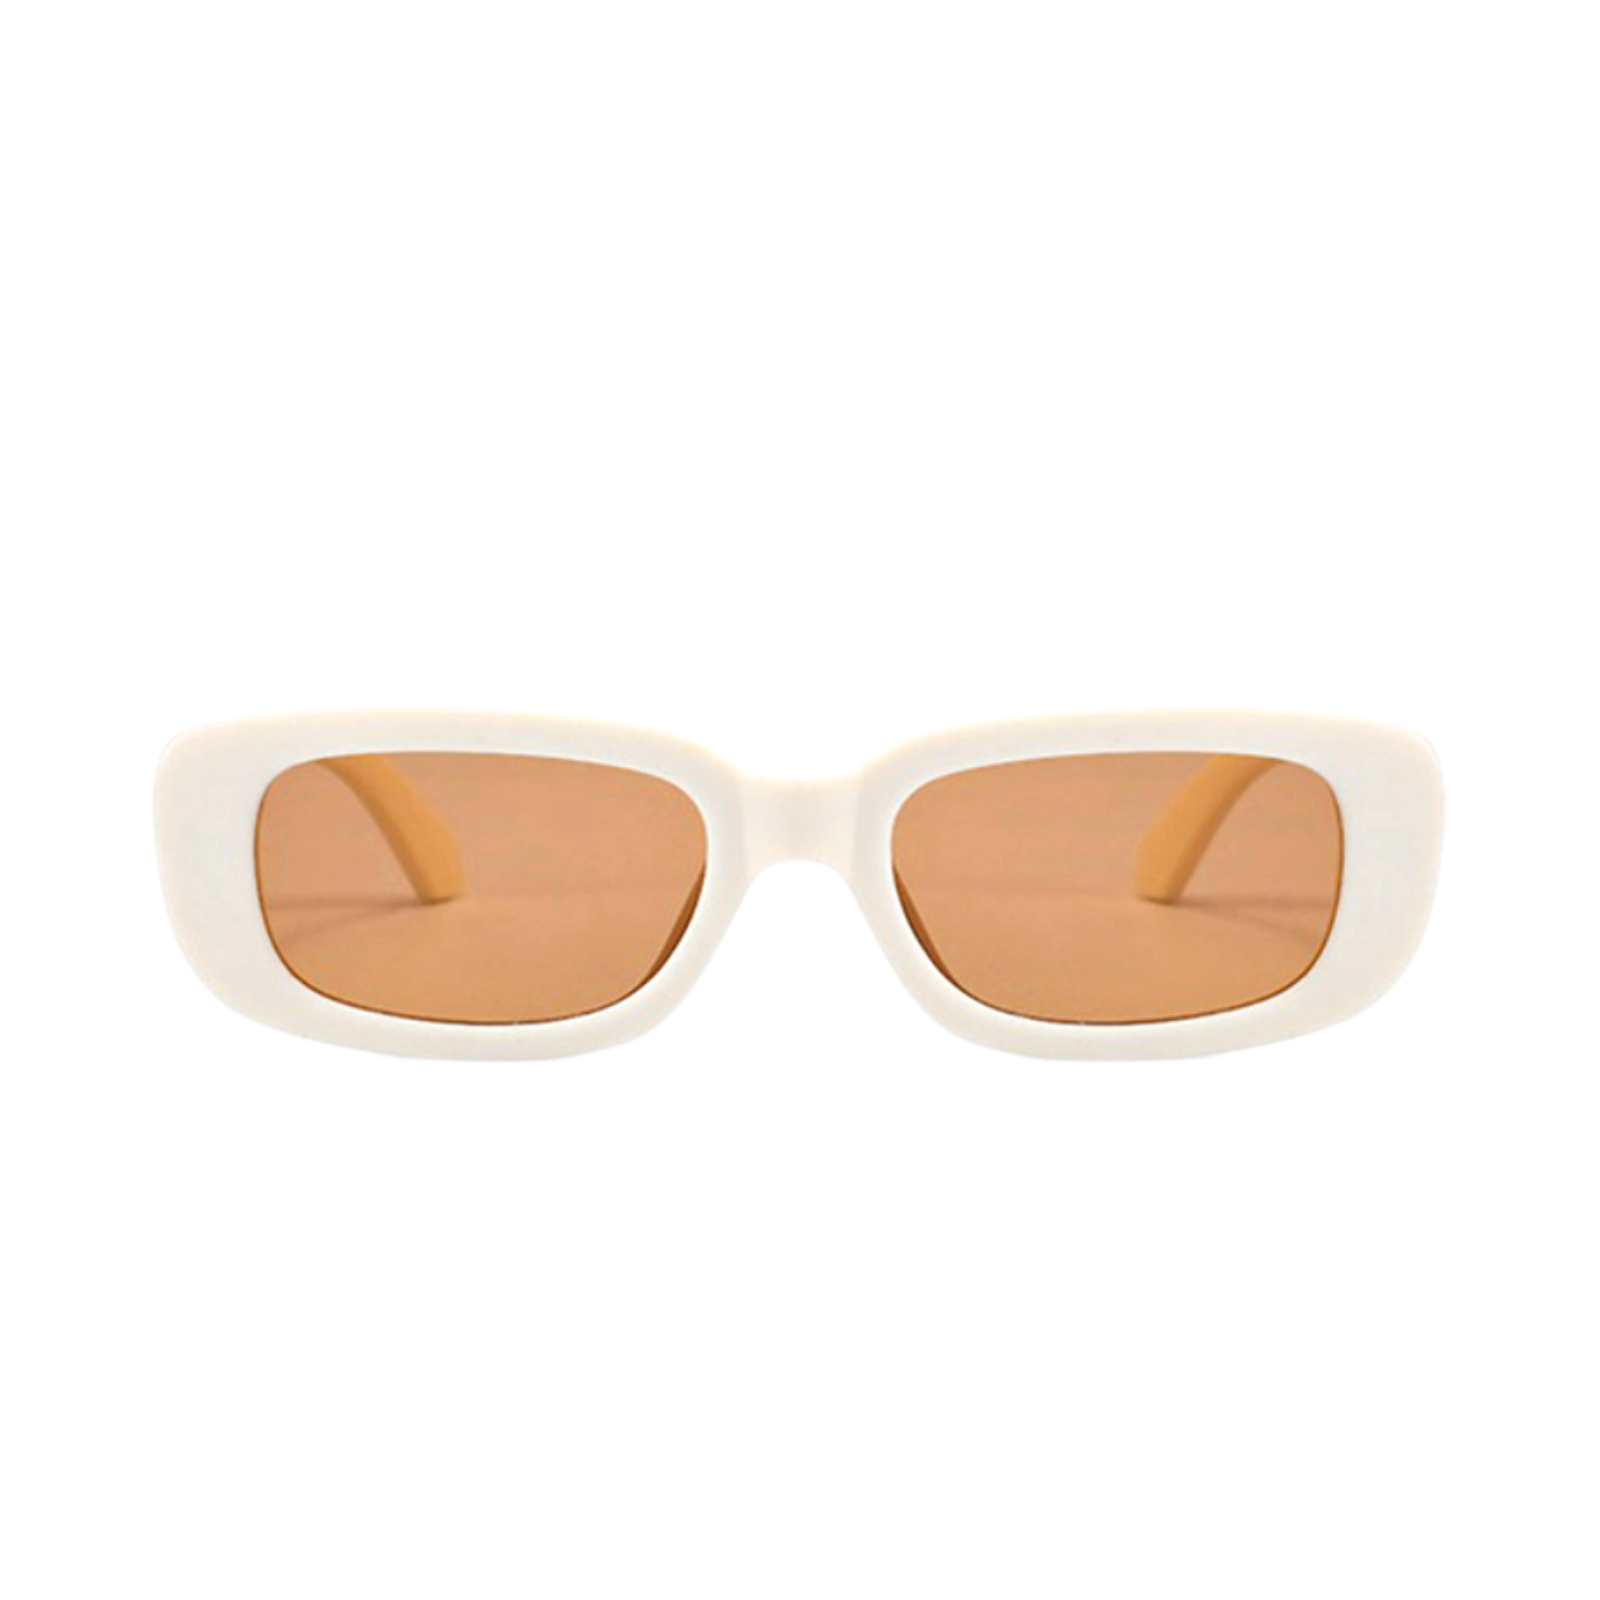 Sadie Sunglasses in White / Brown